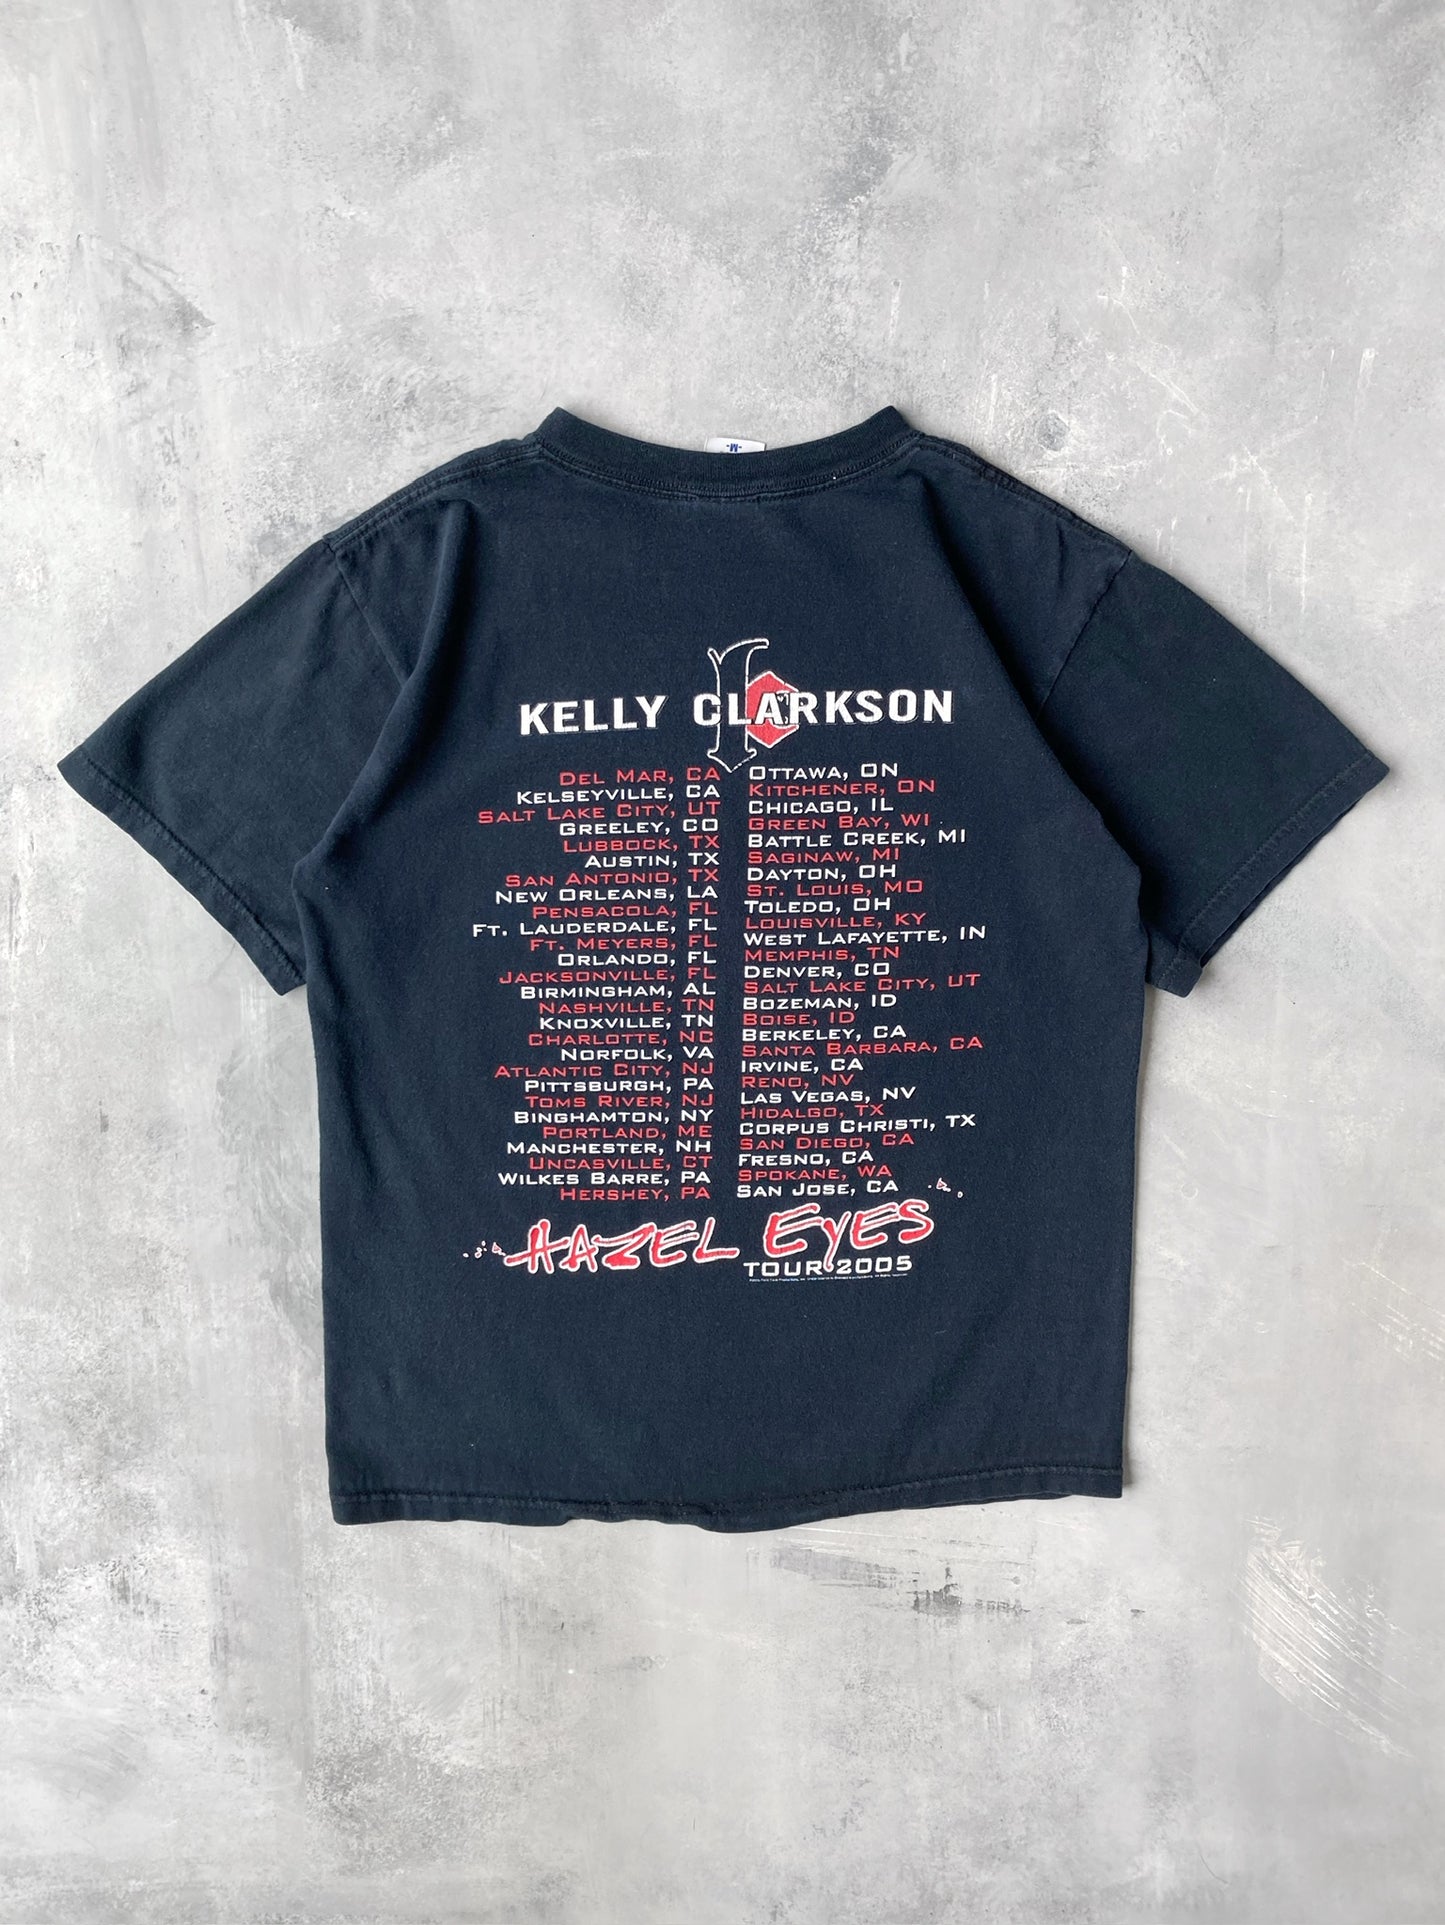 Kelly Clarkson Tour T-Shirt '05 -  Medium